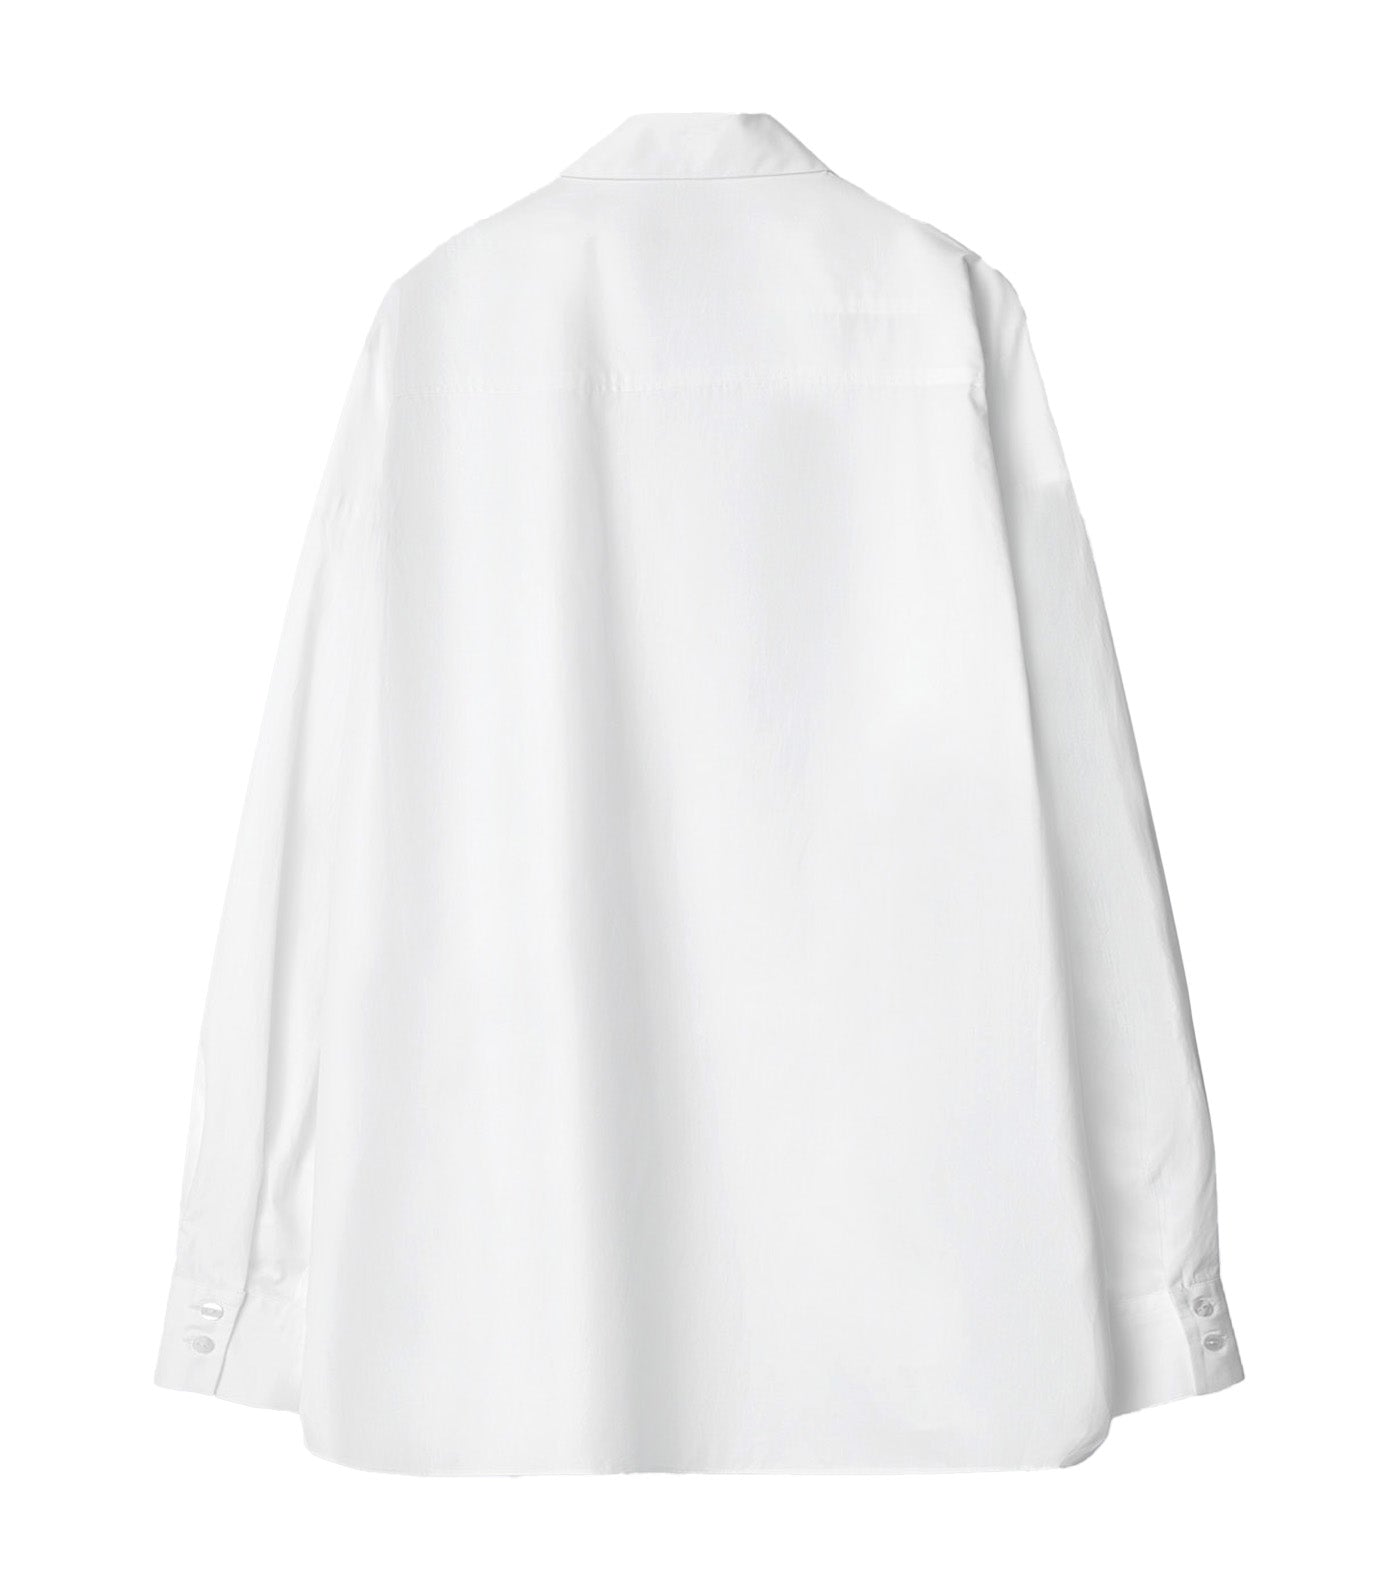 Long Sleeve Shirt White